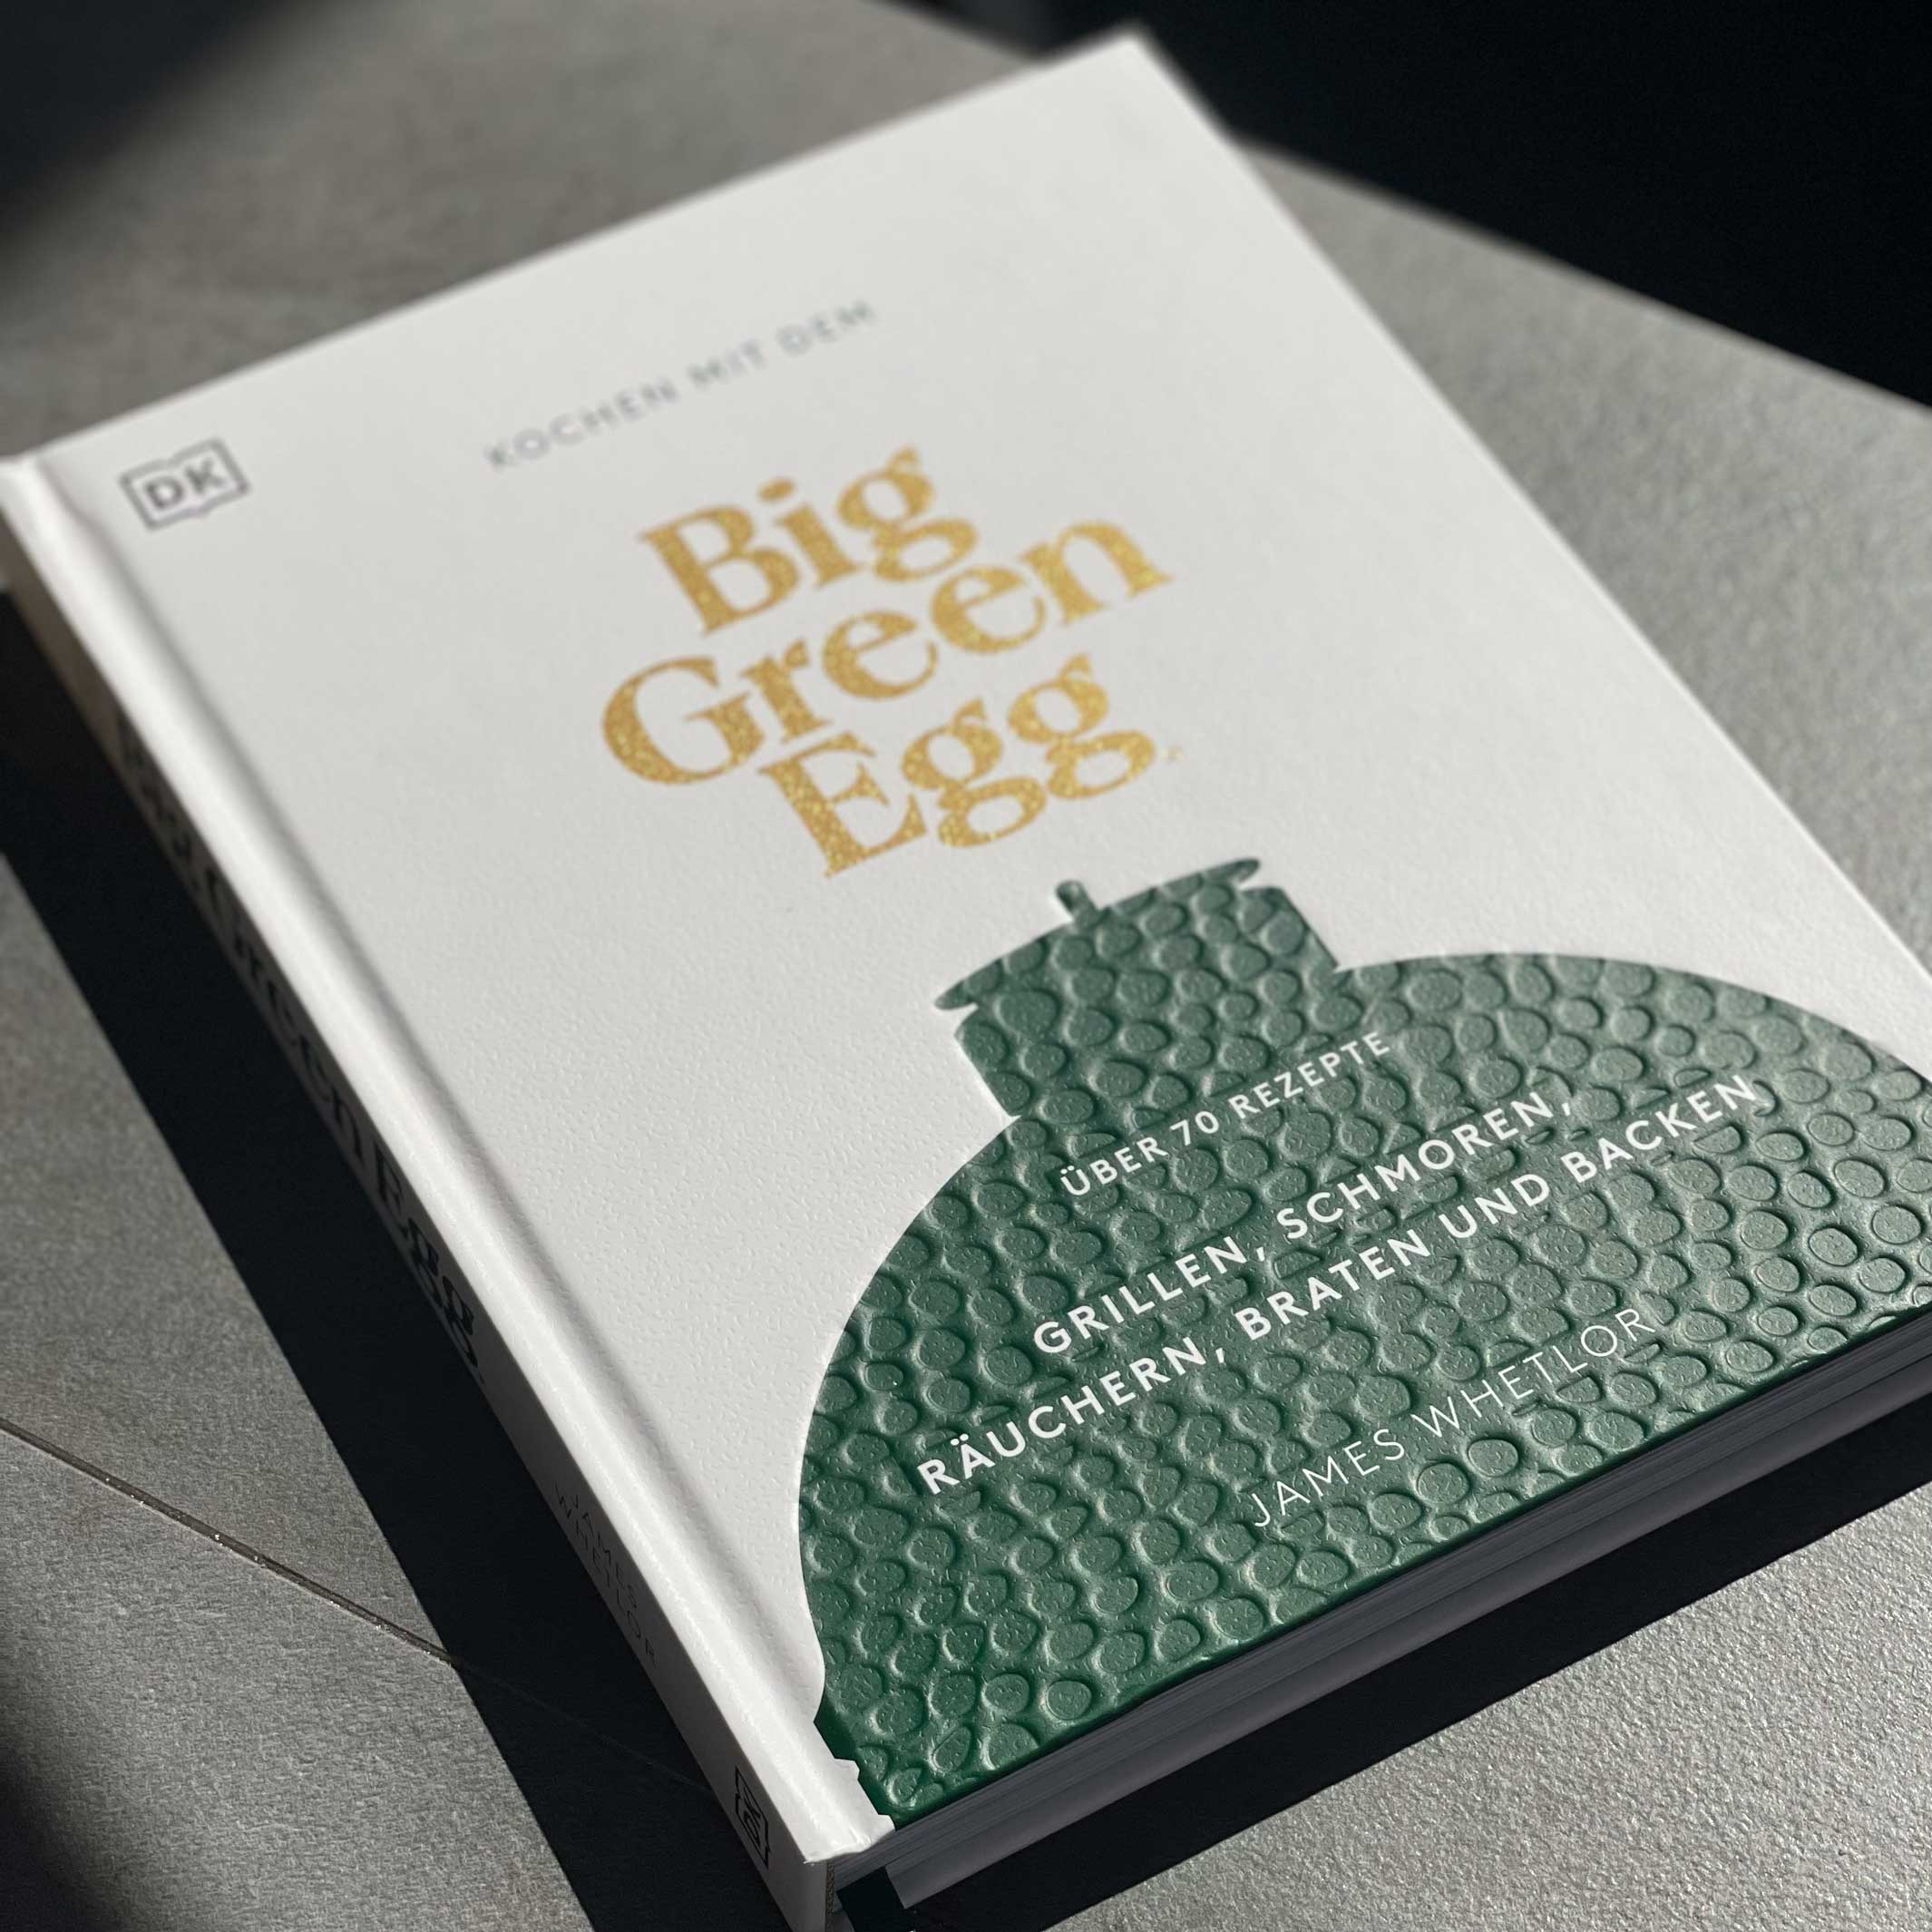 Cuisiner avec le BIG GREEN EGG | LIVRE DE CUISINE | Éditions DK